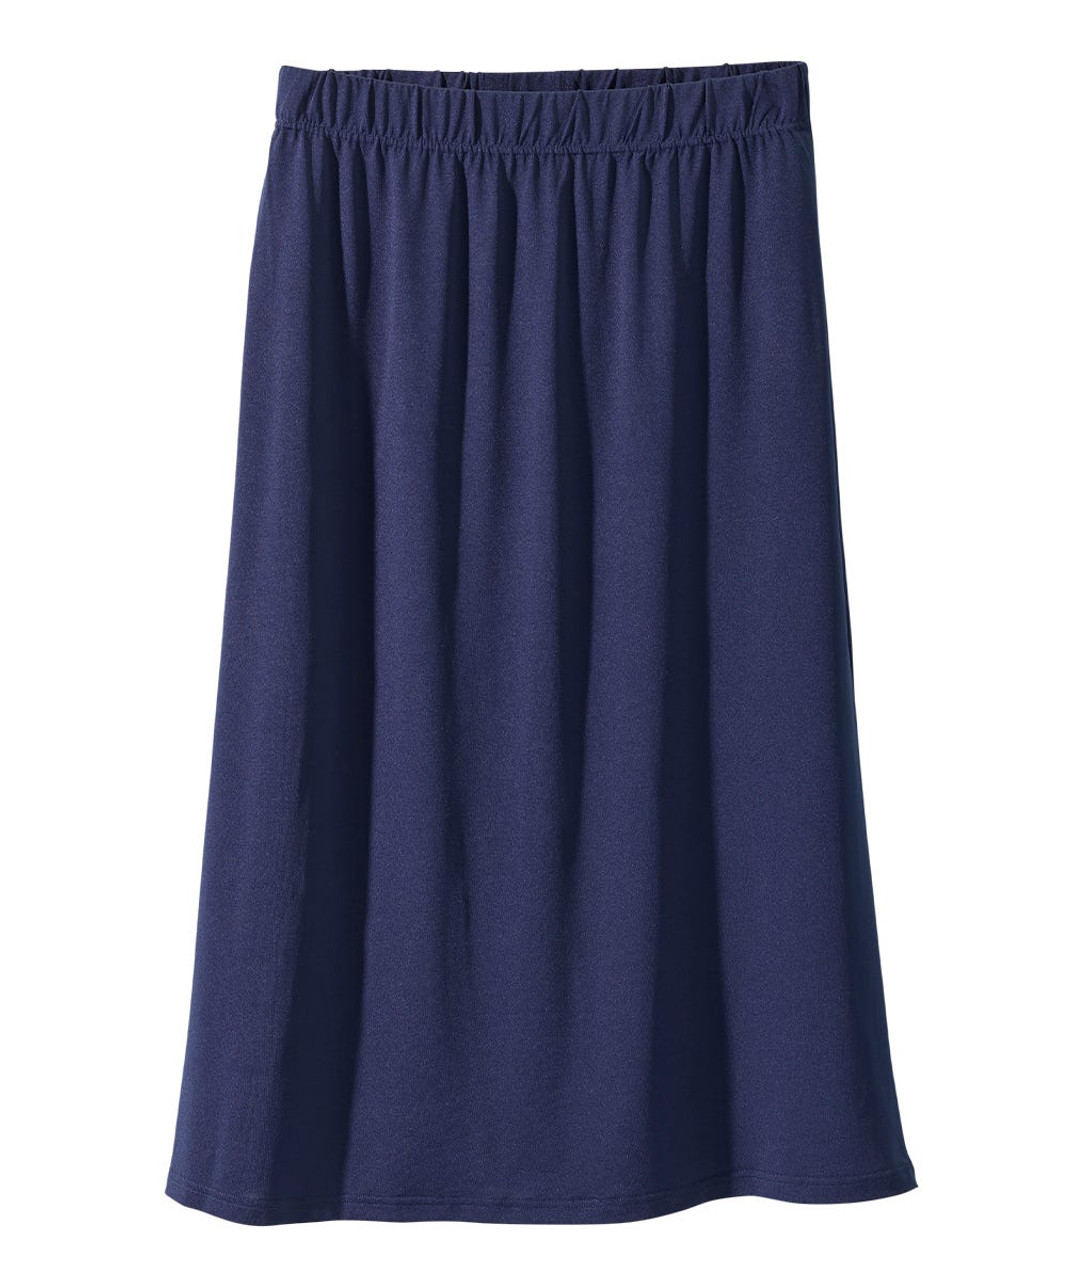 Silverts SV031 Senior Women's Pull-on Skirt Indigo, Size=S, SV031-SV773-S